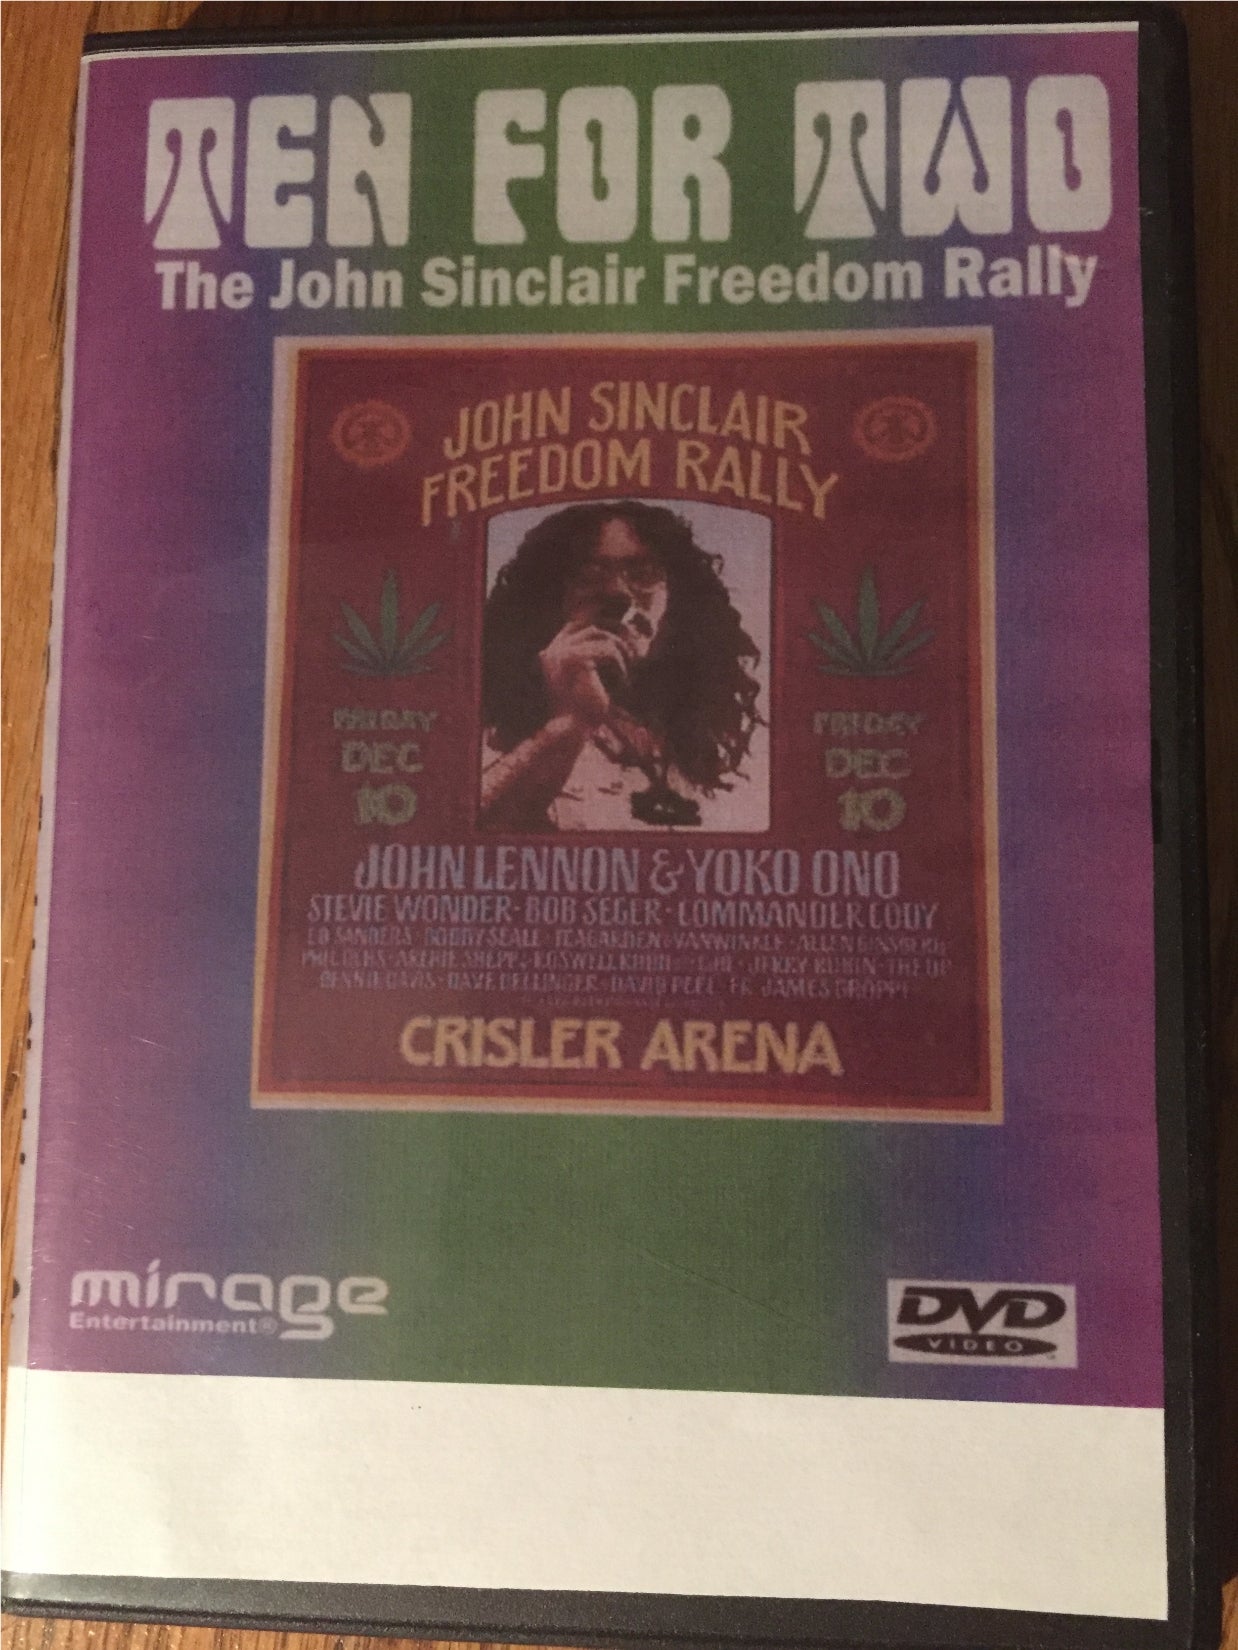 TEN FOR TWO ANN ARBOR JOHN SINCLAIR FREEDOM RALLY DVD